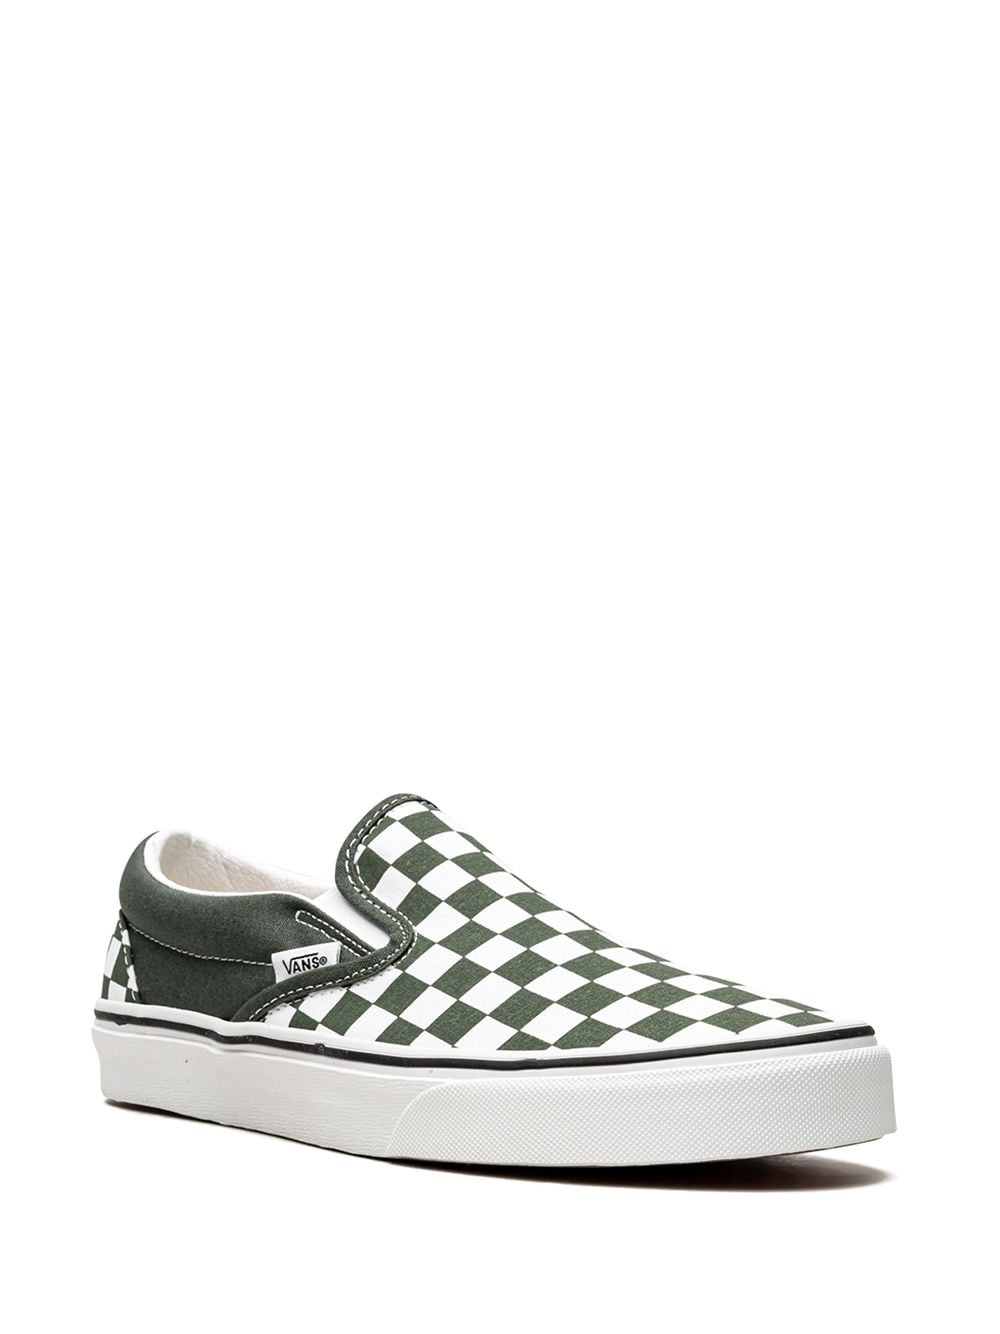 Vans "Classic slip-on ""Checkerboard"" sneakers" - Groen